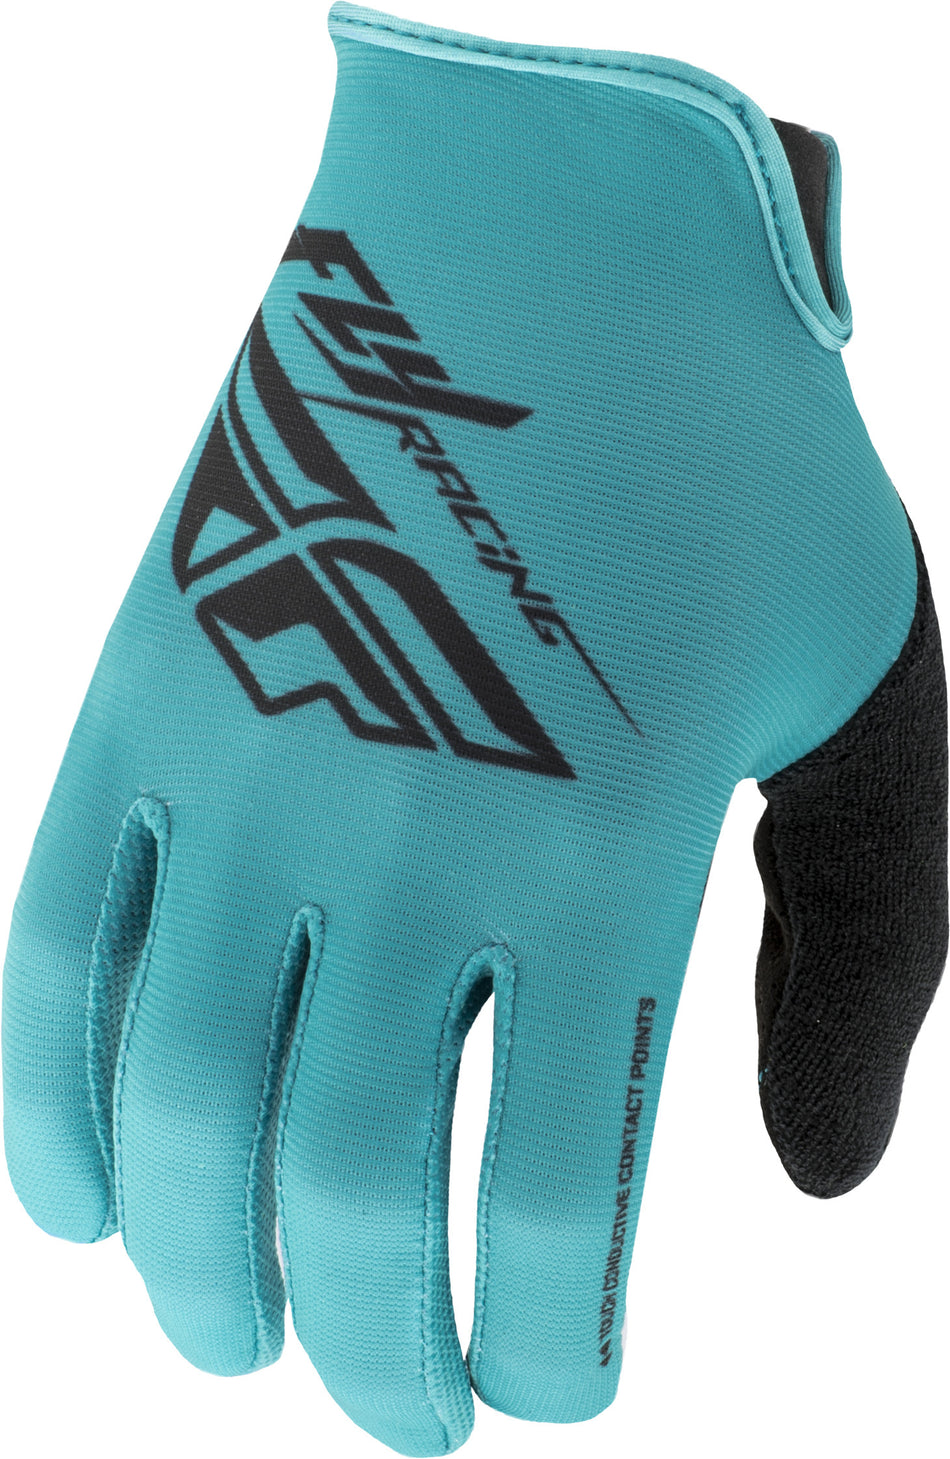 FLY RACING Media Gloves Teal/Black Sz 09 350-09709